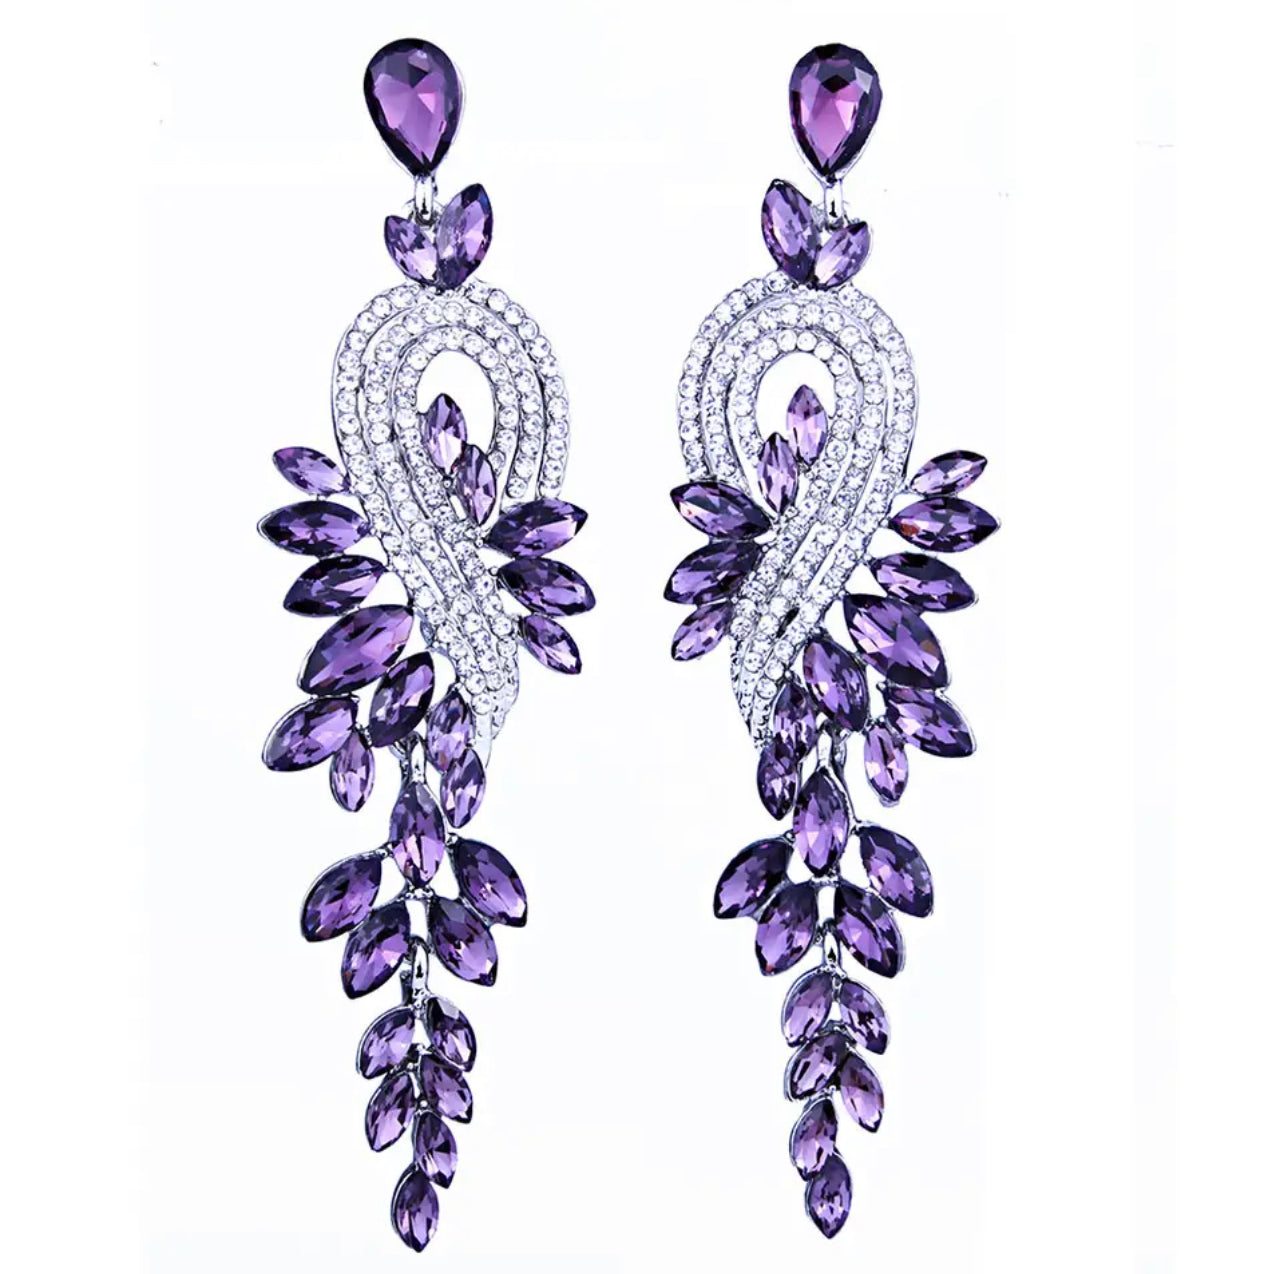 Hollywood Crystal Earrings (Purple- Silver)